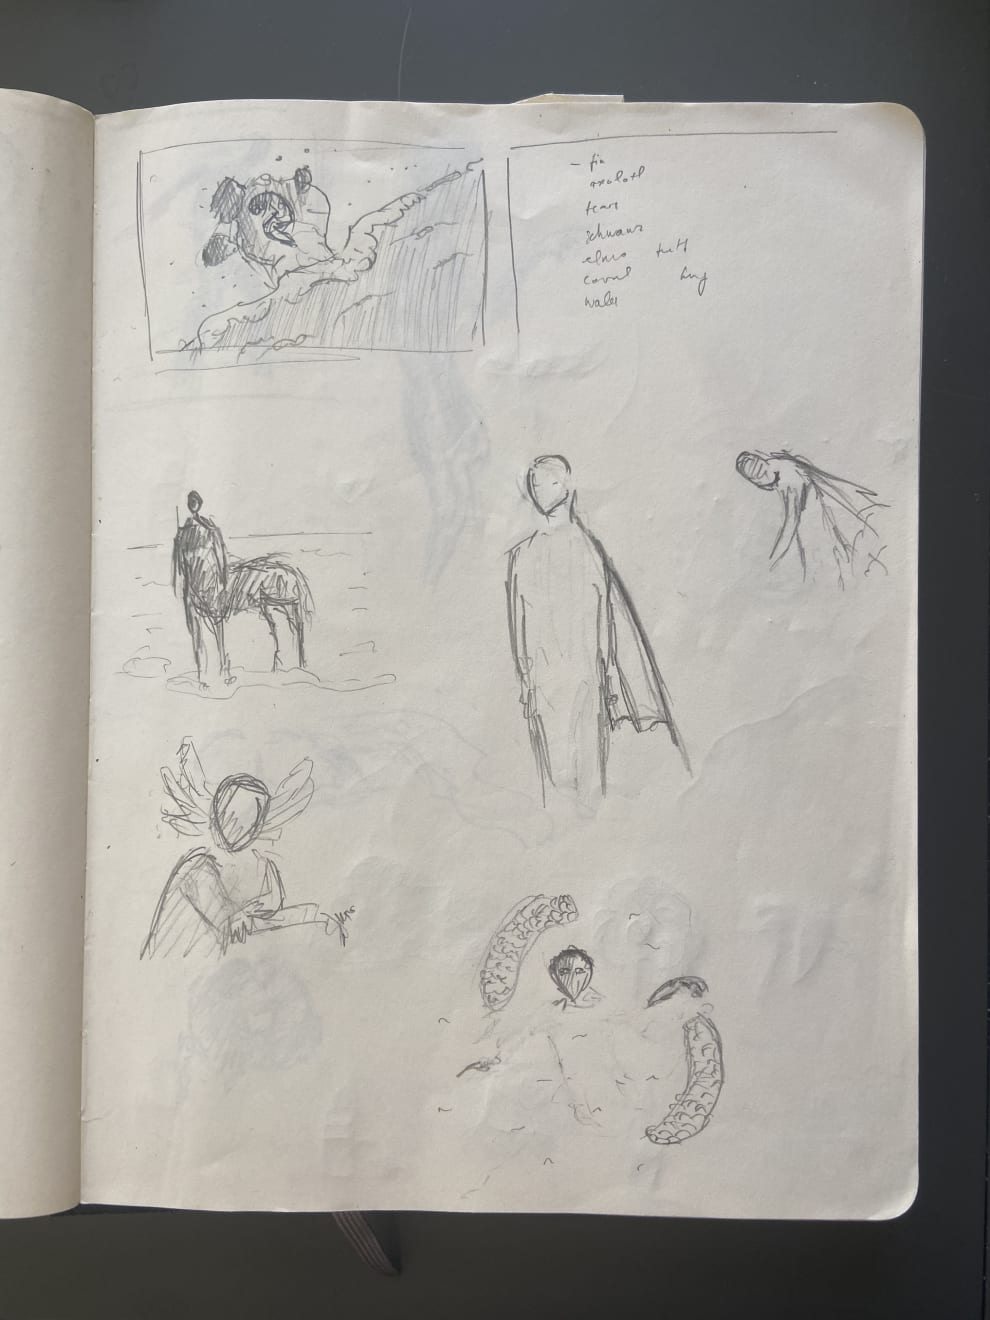 DAVID UZOCHUKWU, Early sketches, 2019